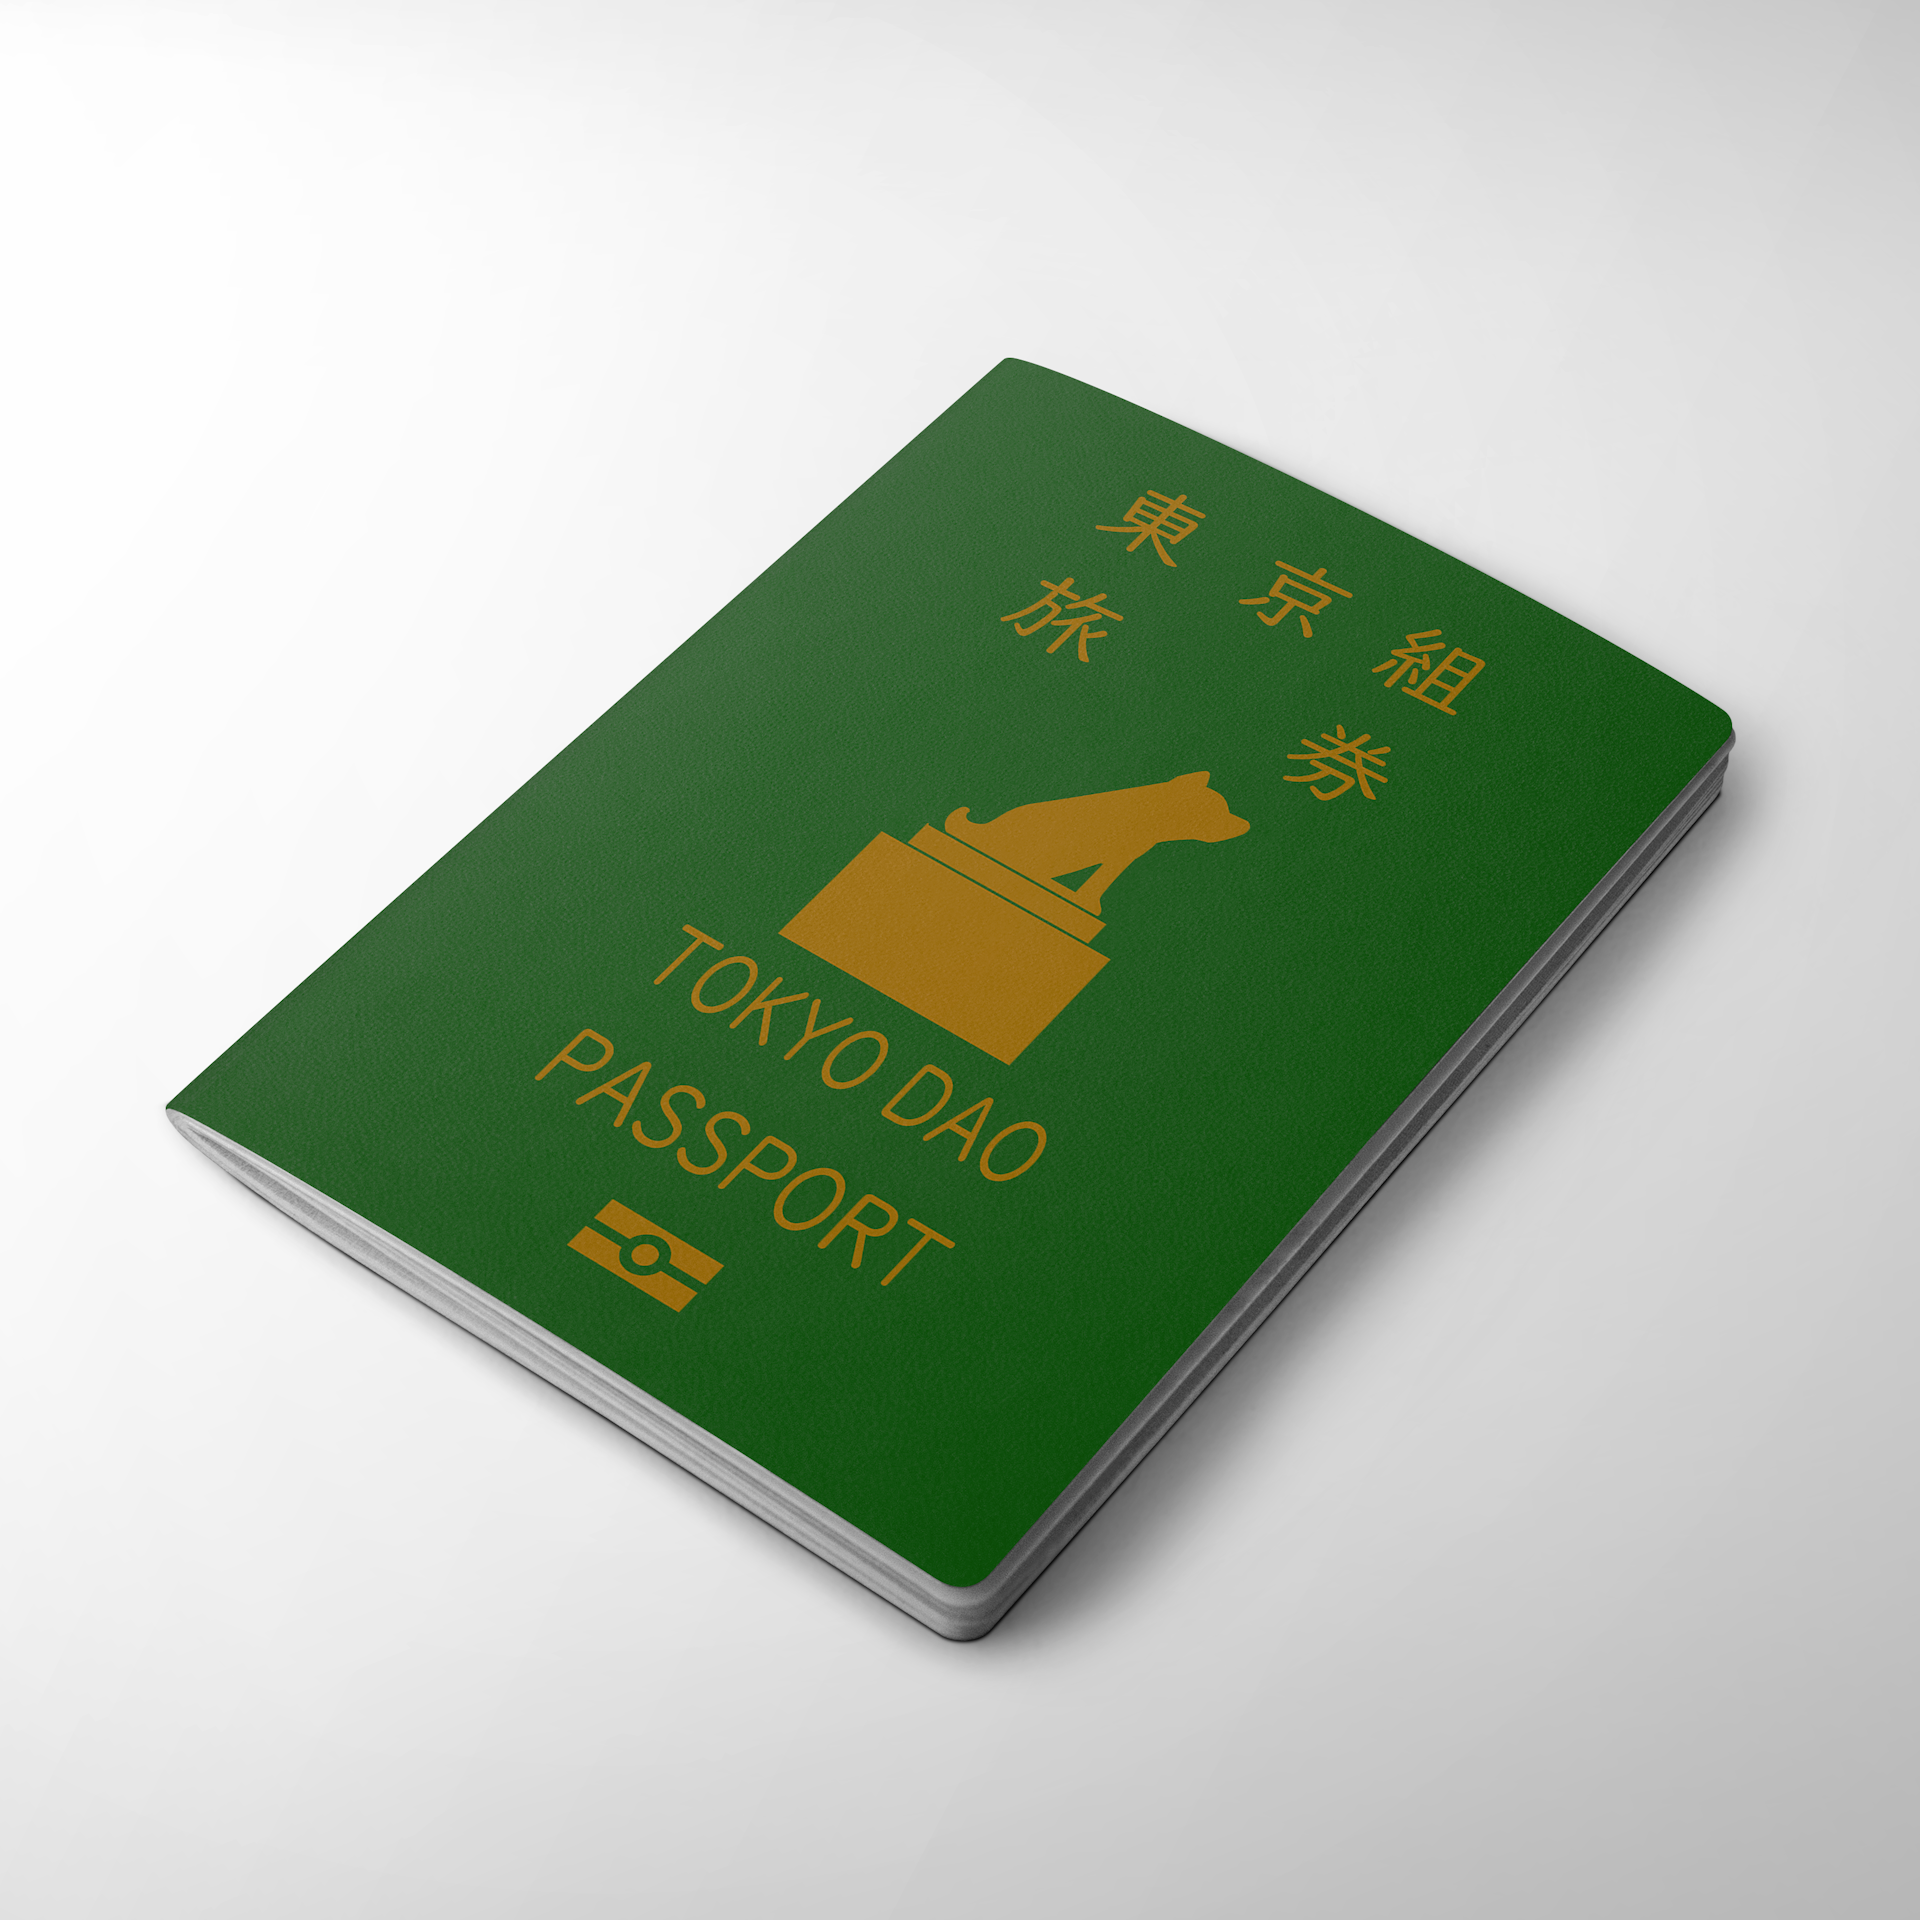 Tokyo DAO Passport